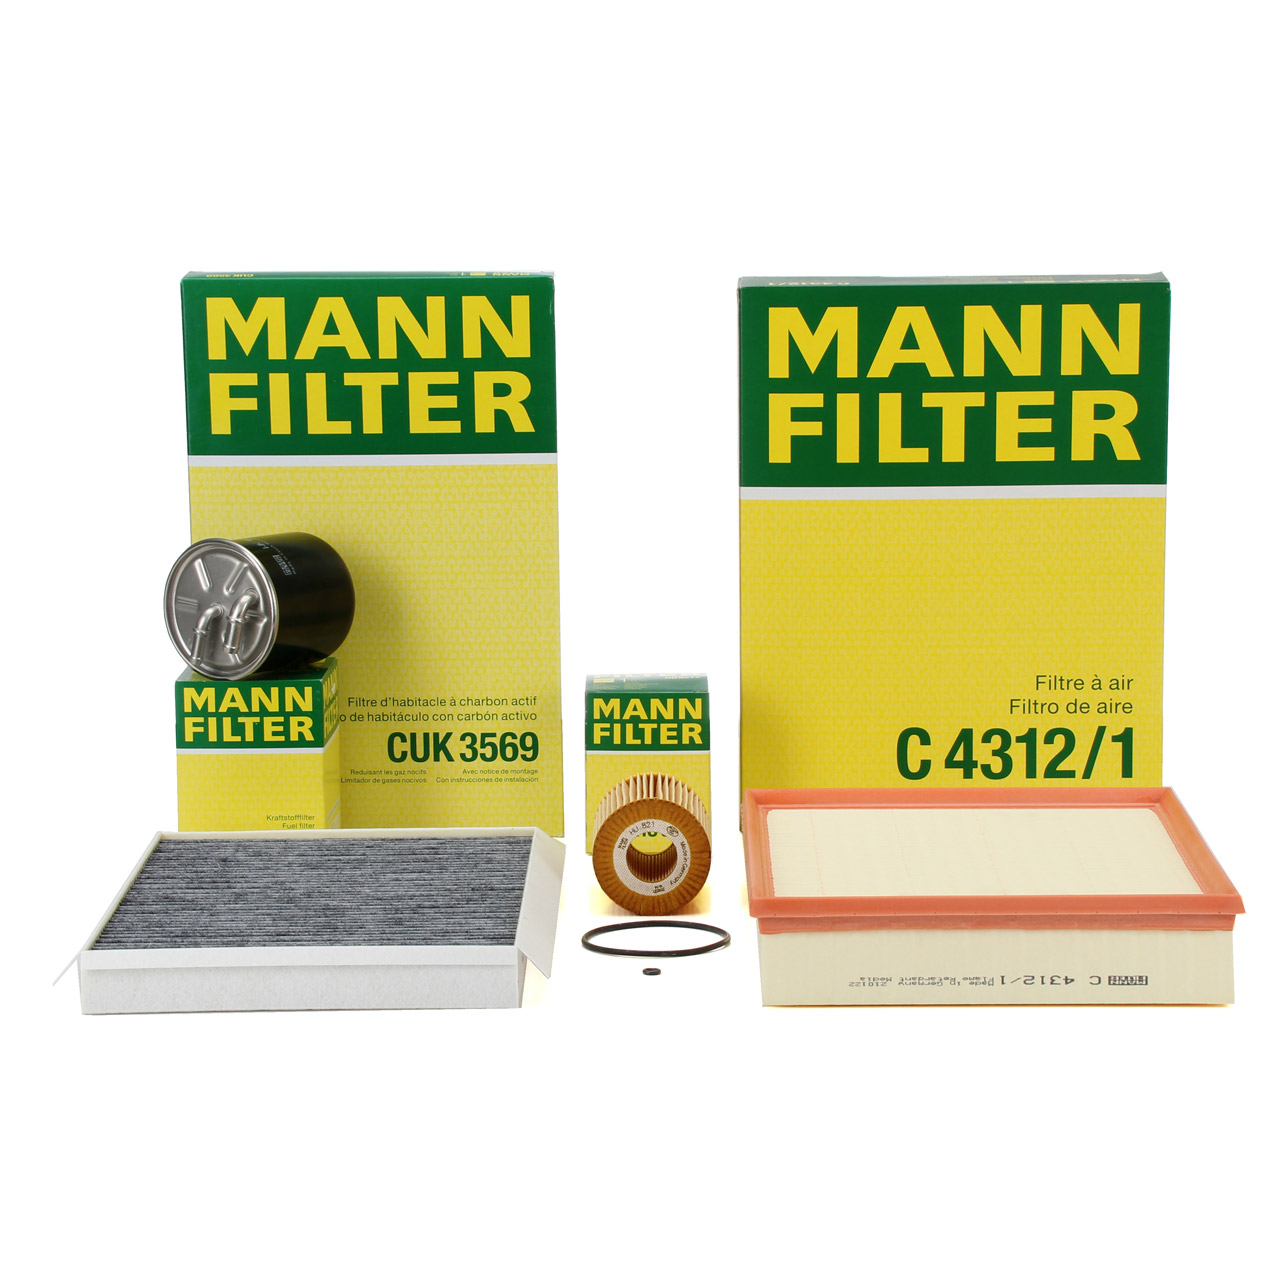 MANN-FILTER Luftfilter Artikel: C 25 126